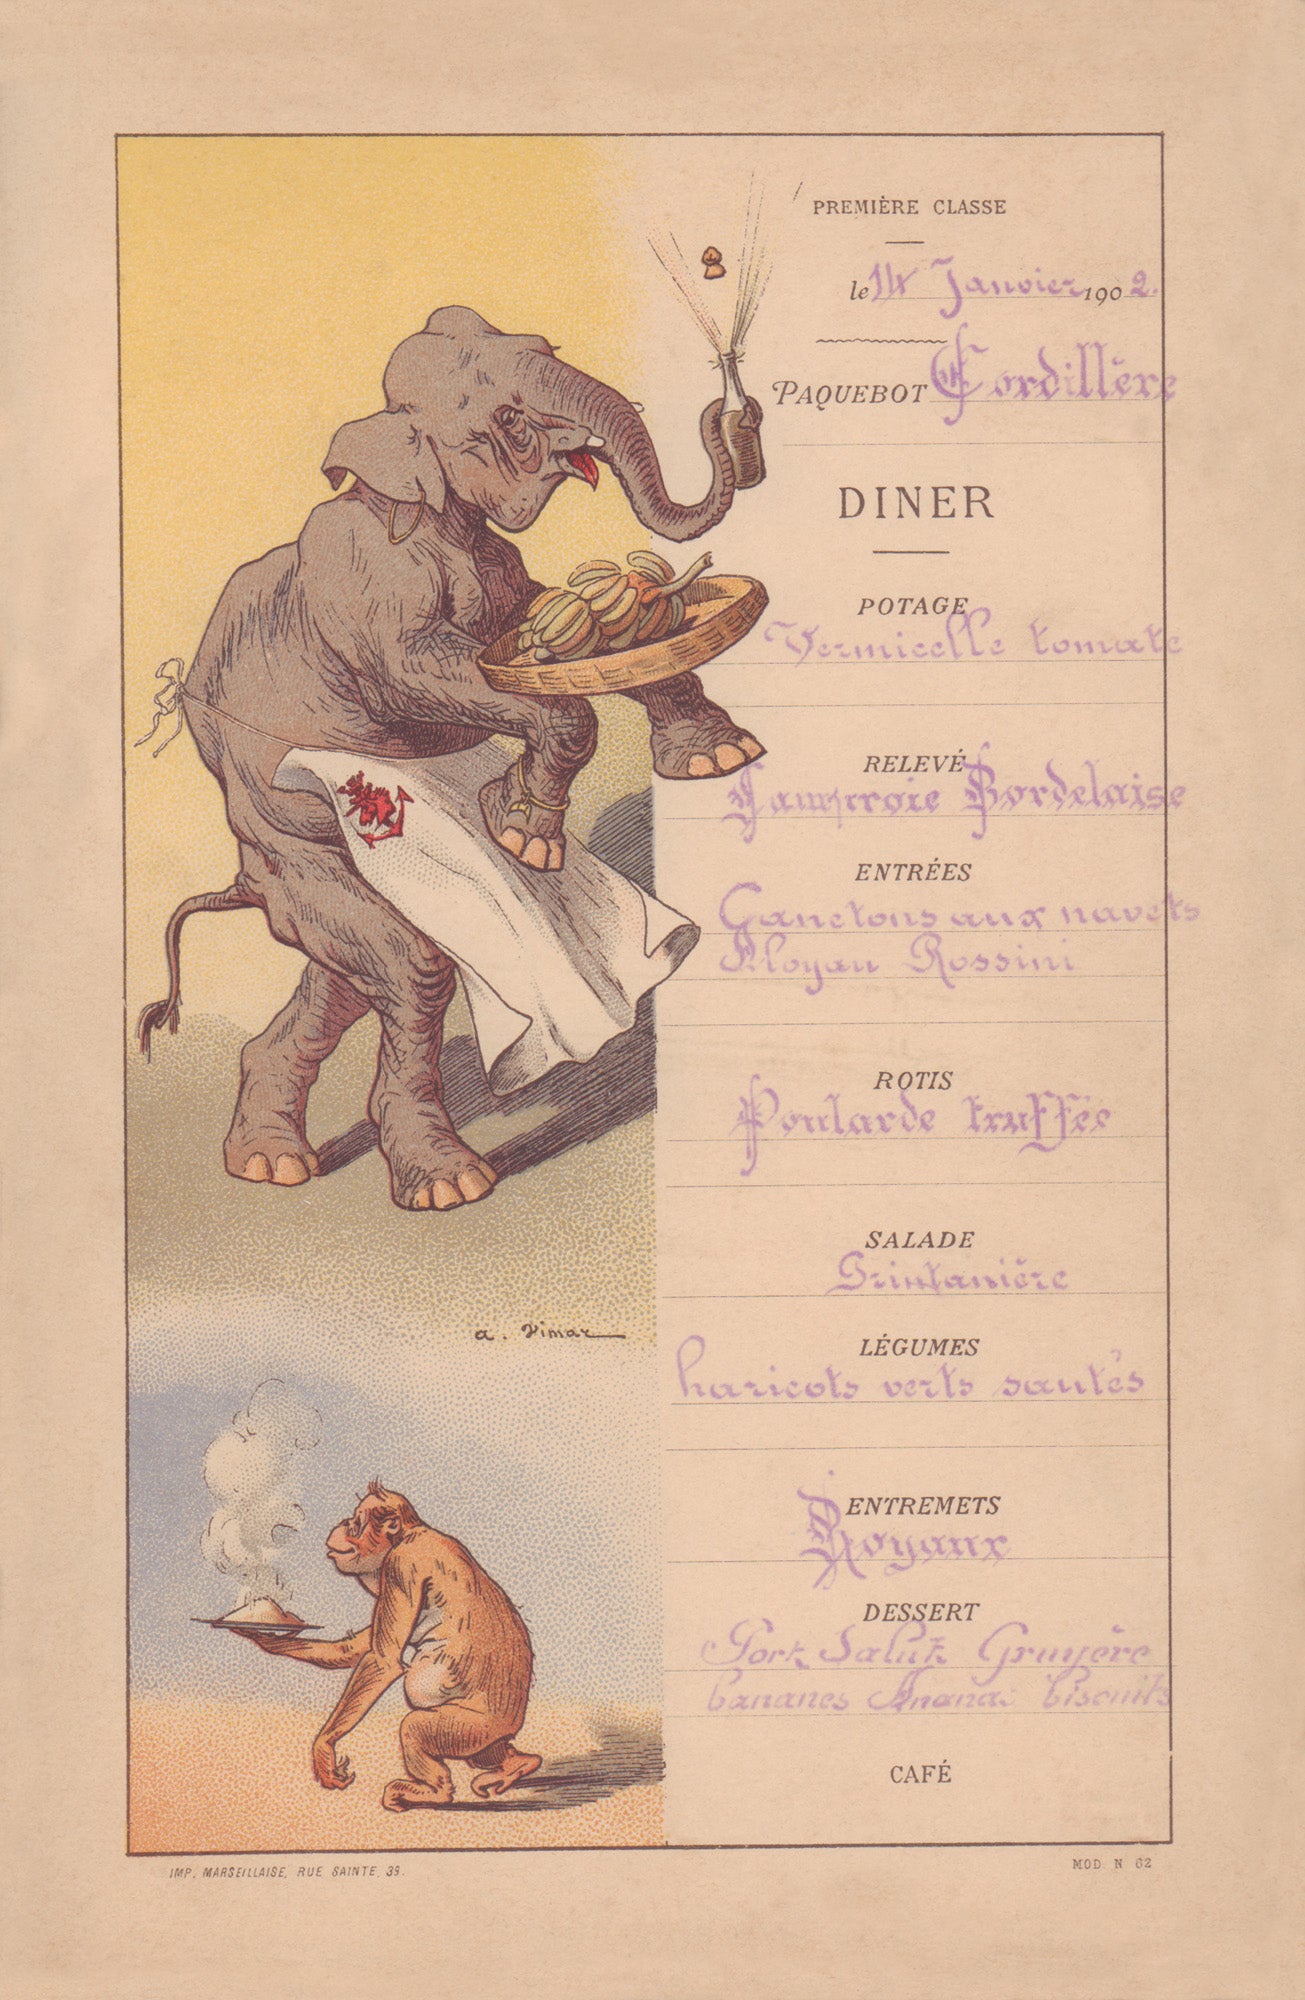 Le Paquebot Cordillere 1902 (Elephant) Menu Art by Auguste Vimar | Vintage Menu Art - dinner menu